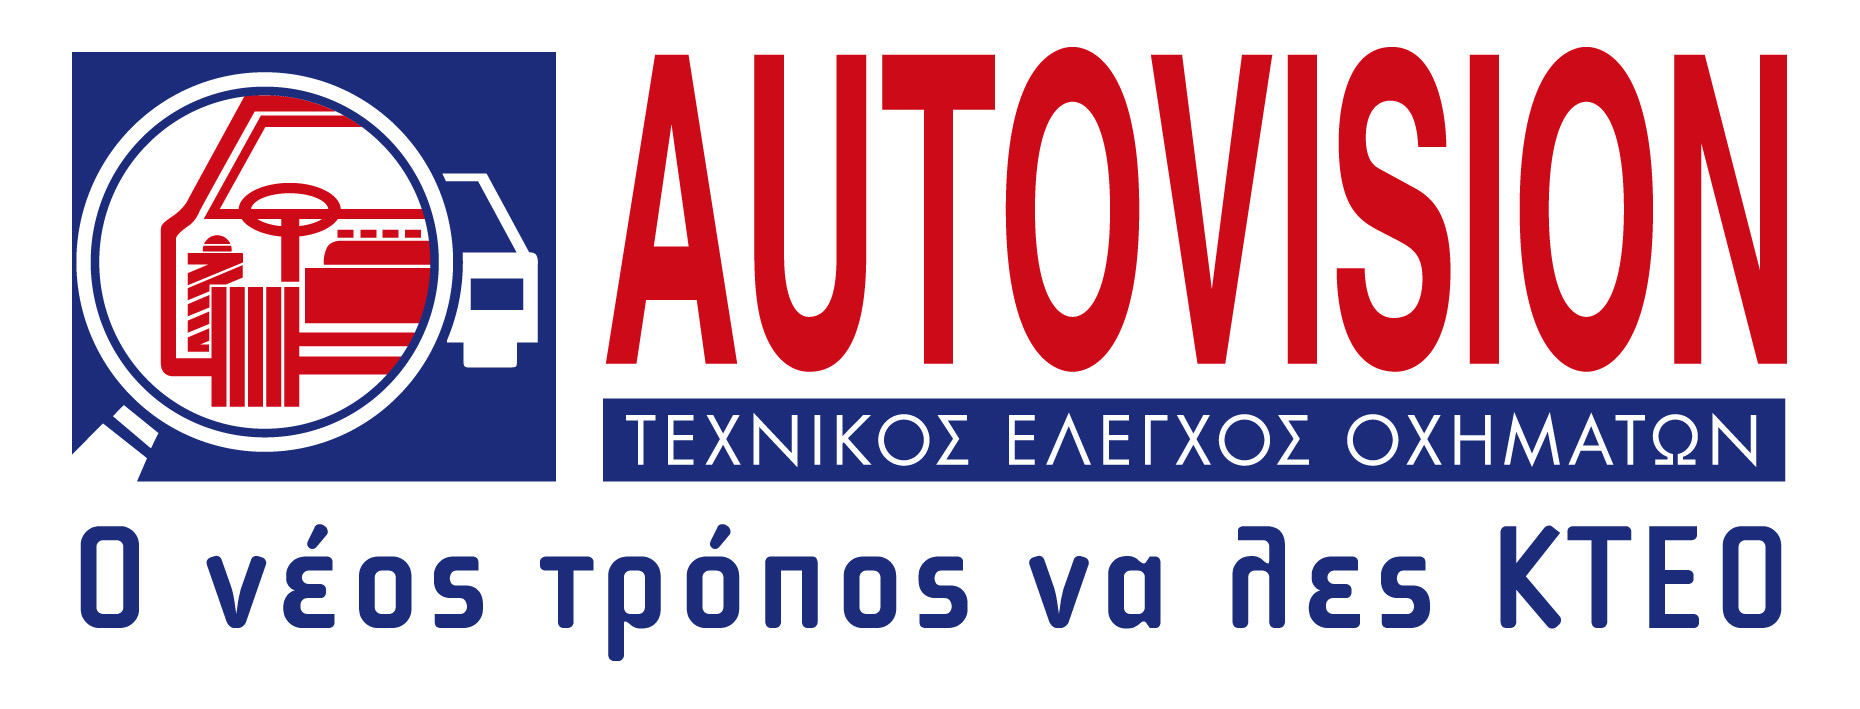 autovision logo.jpg